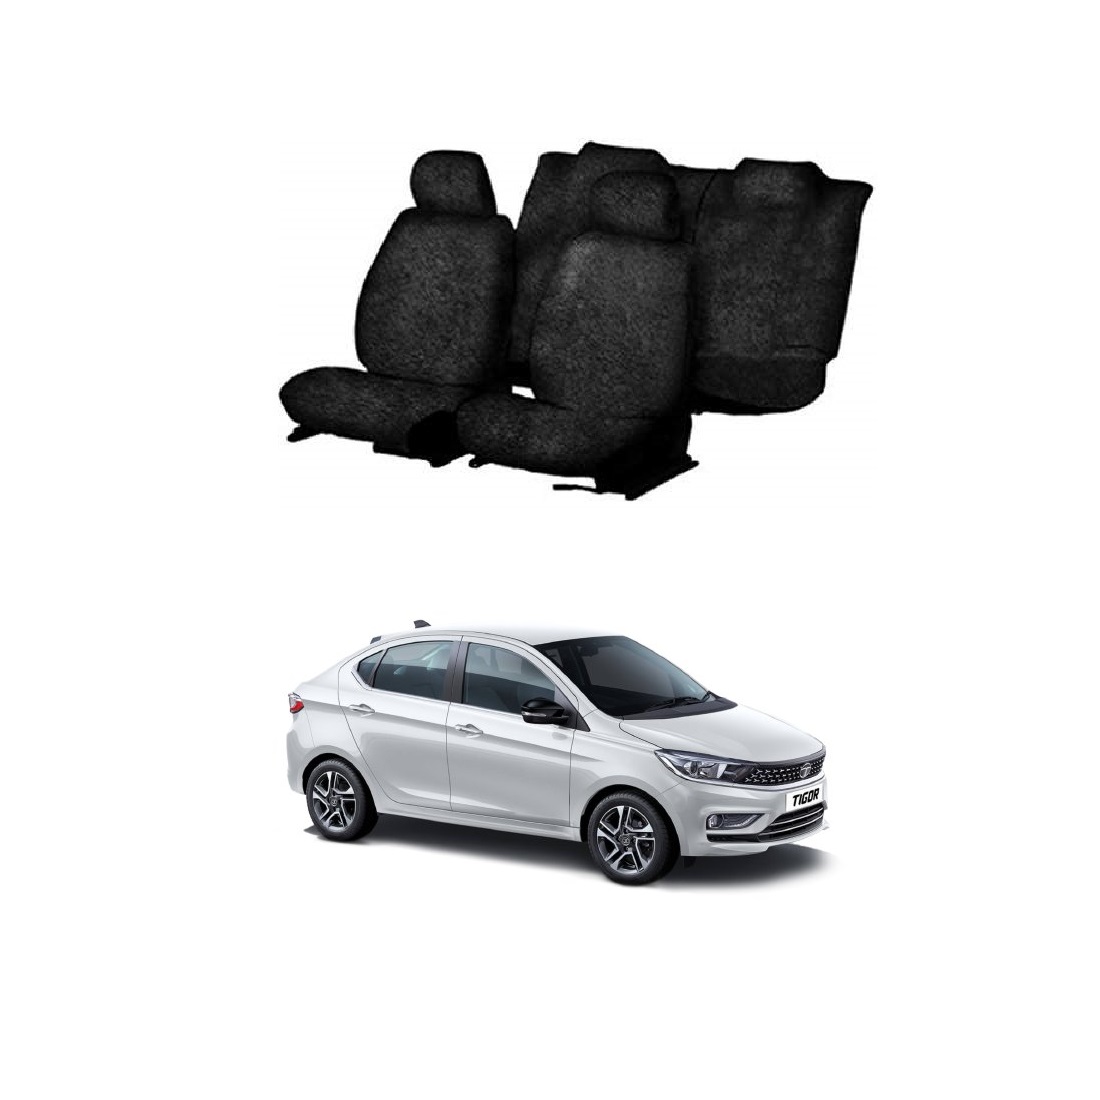 Cotton Car Seat Cover For Tata Tigor (Black)